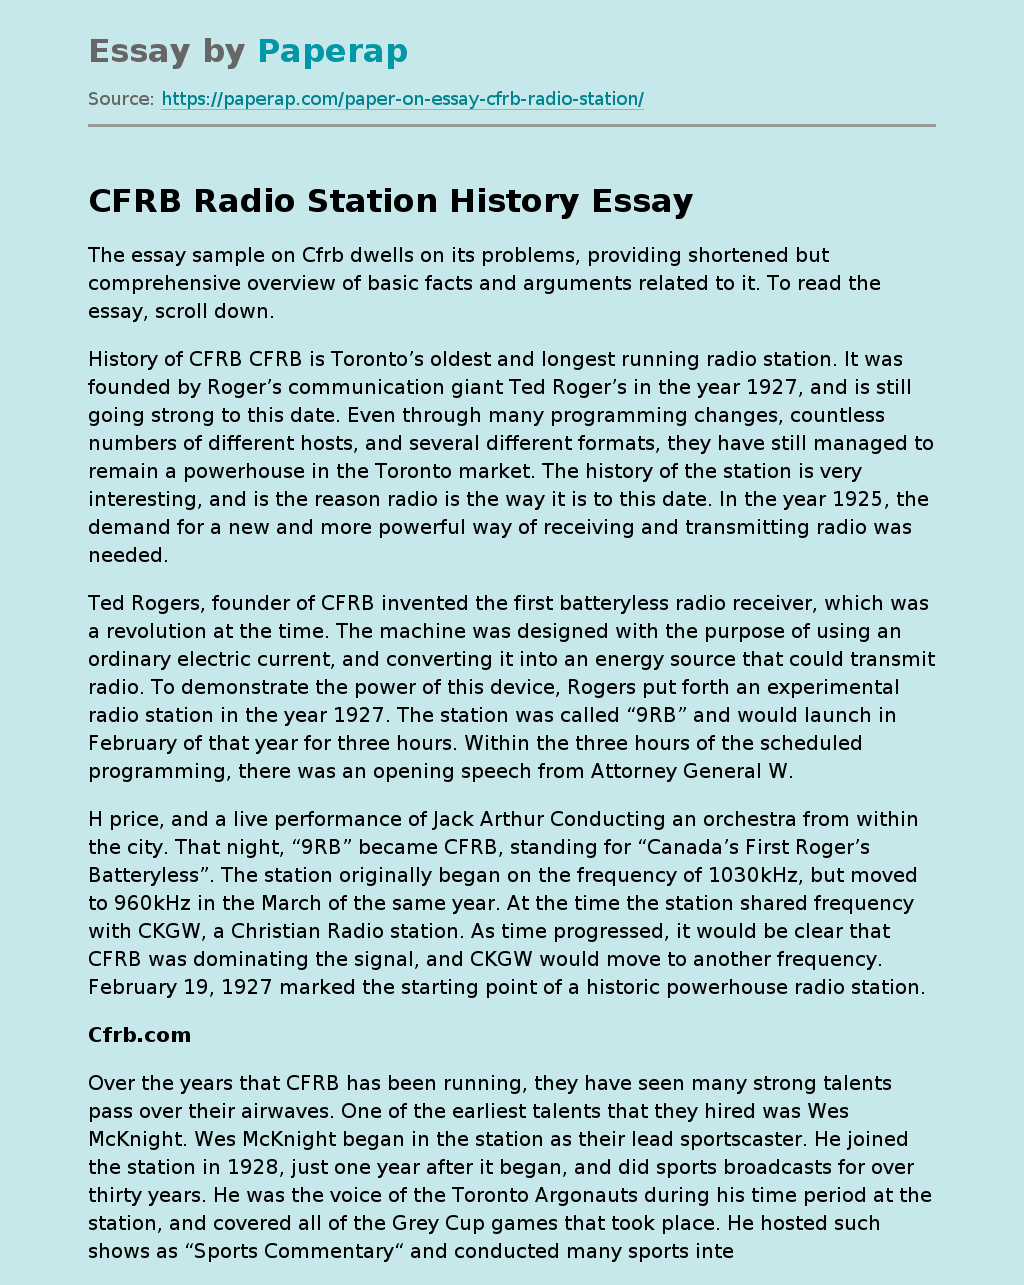 CFRB Radio Station History